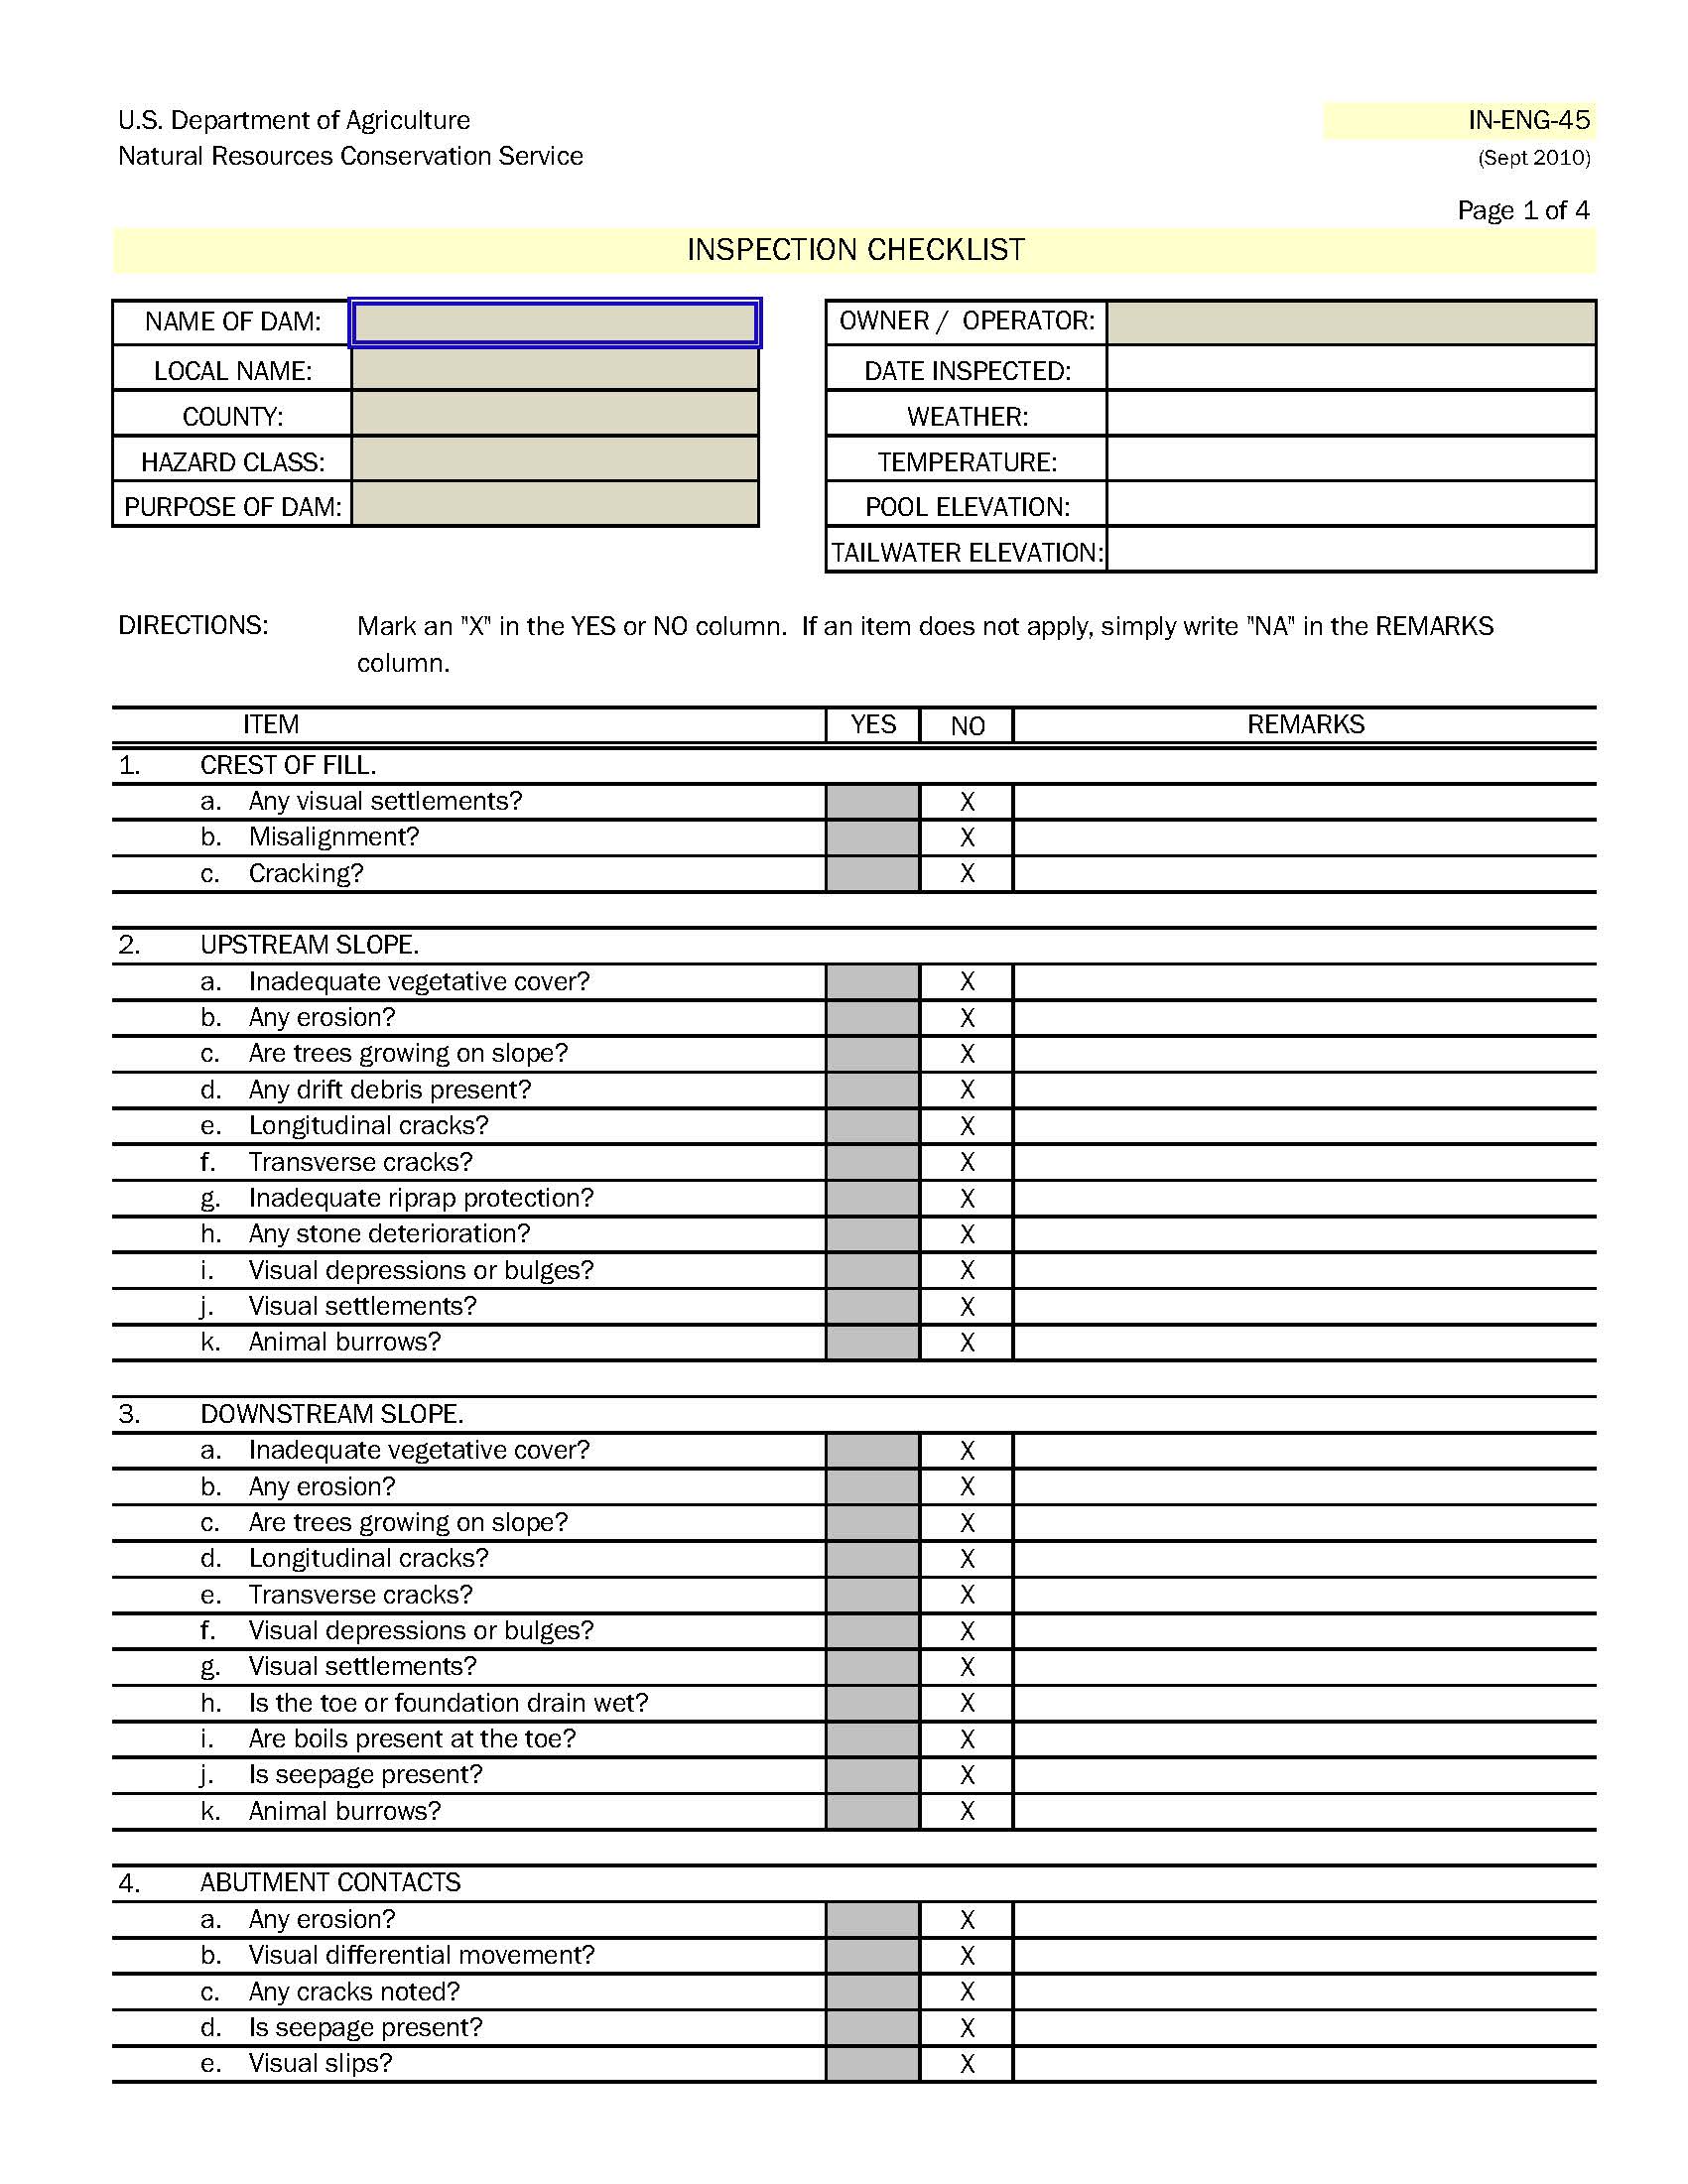 NRCS Pond checklist